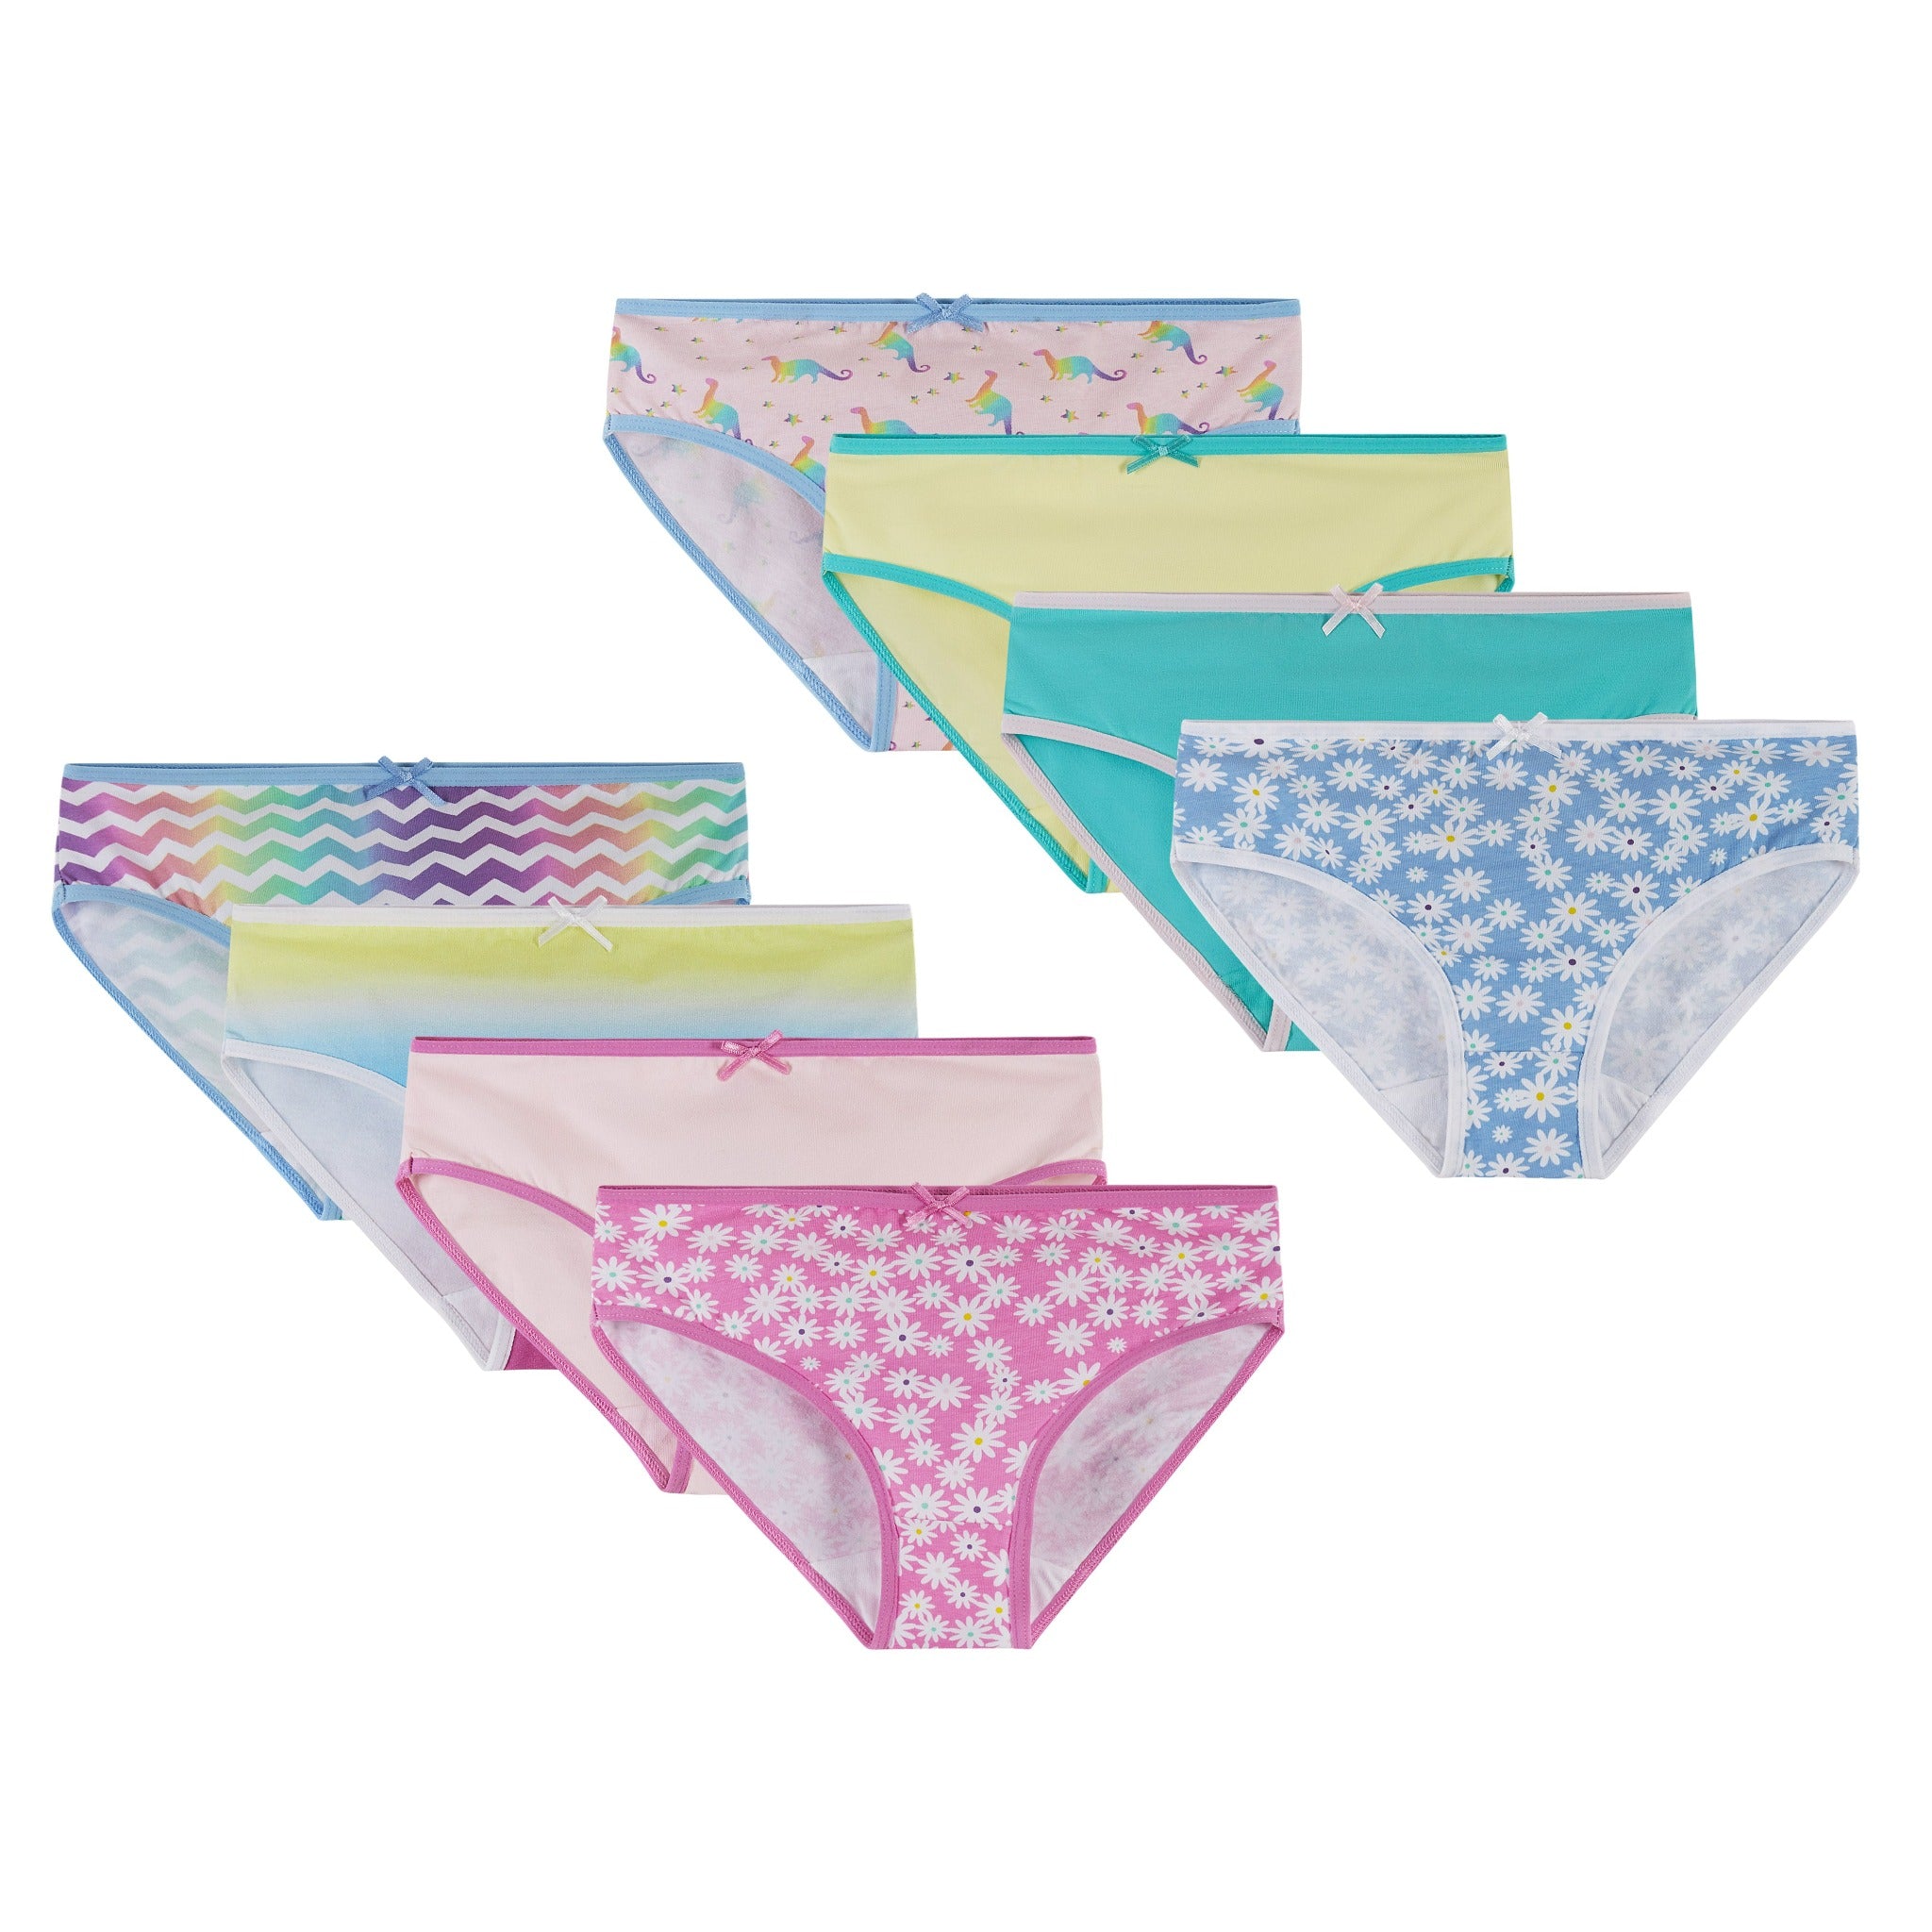 Everlast Women's 4 Pk underwear Bikini Briefs